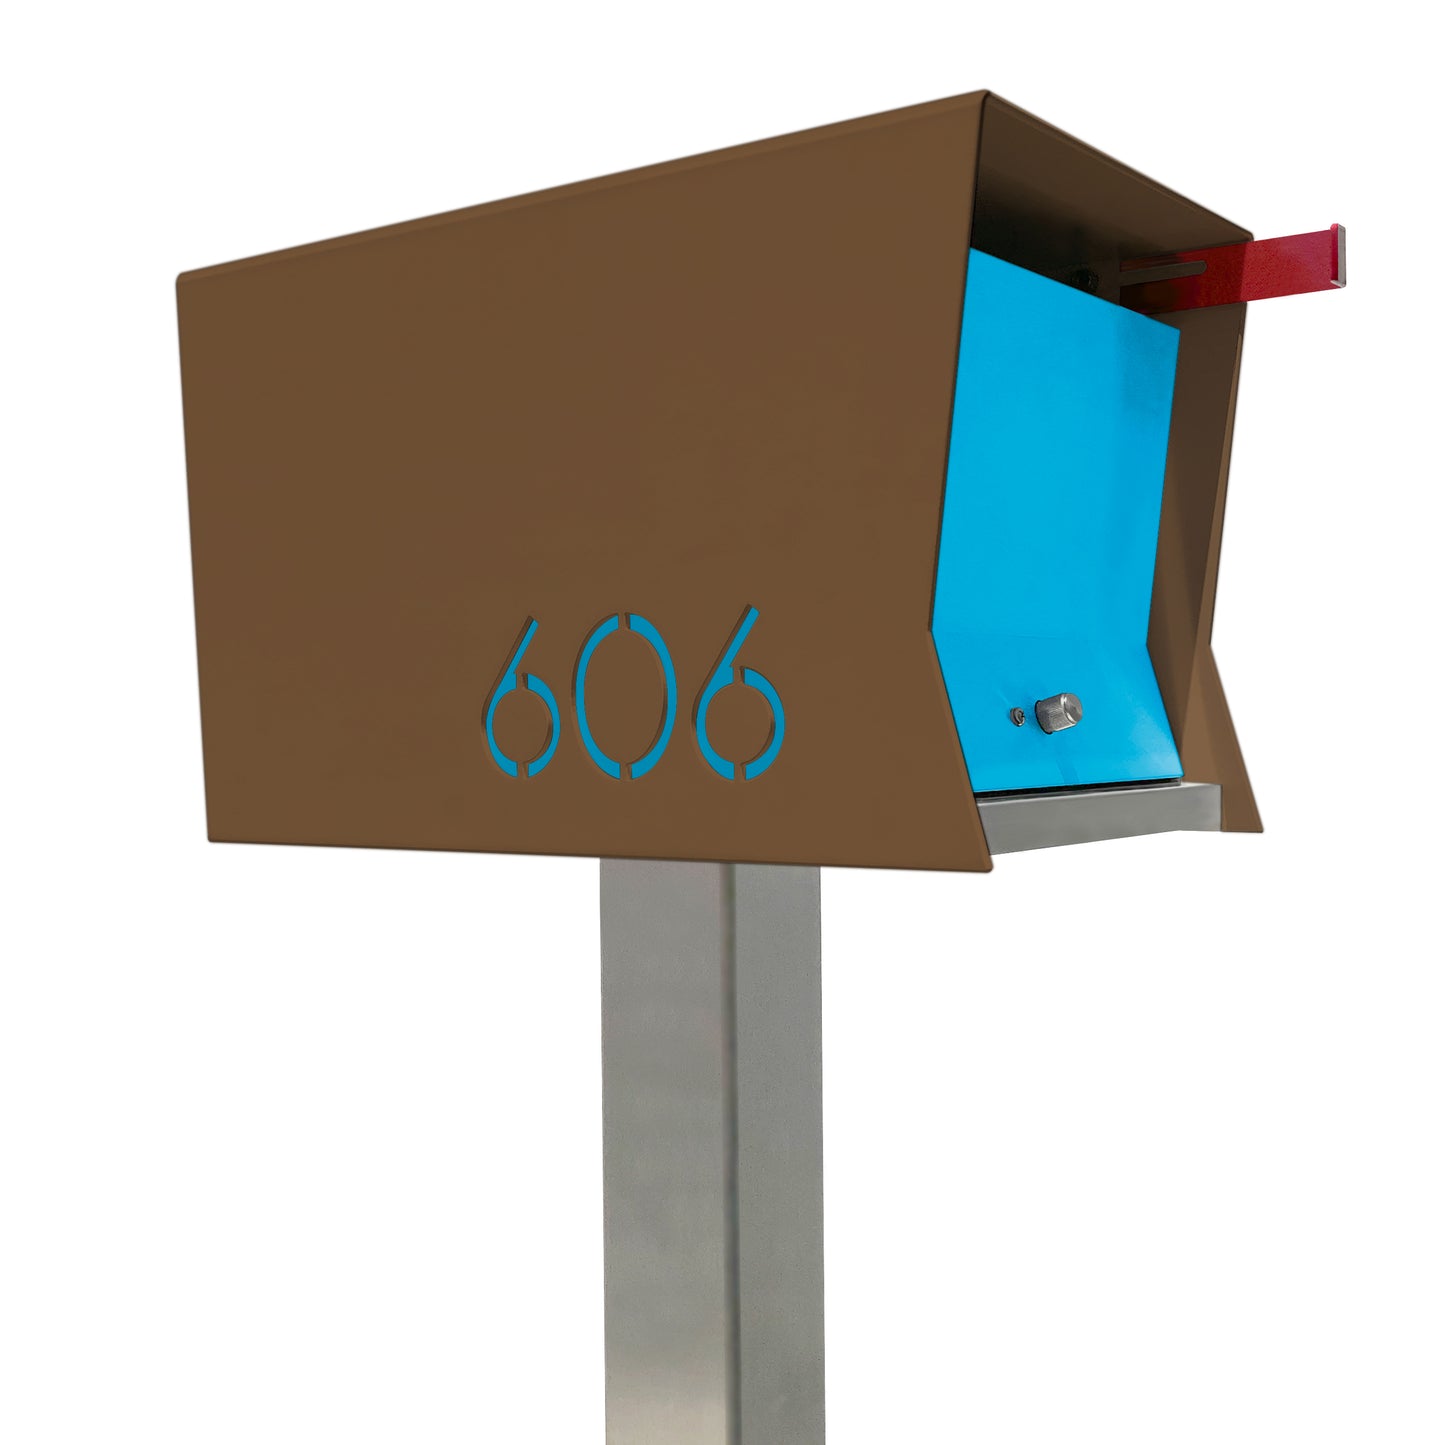 The Original Retrobox in COCONUT - Modern Mailbox brown and blue